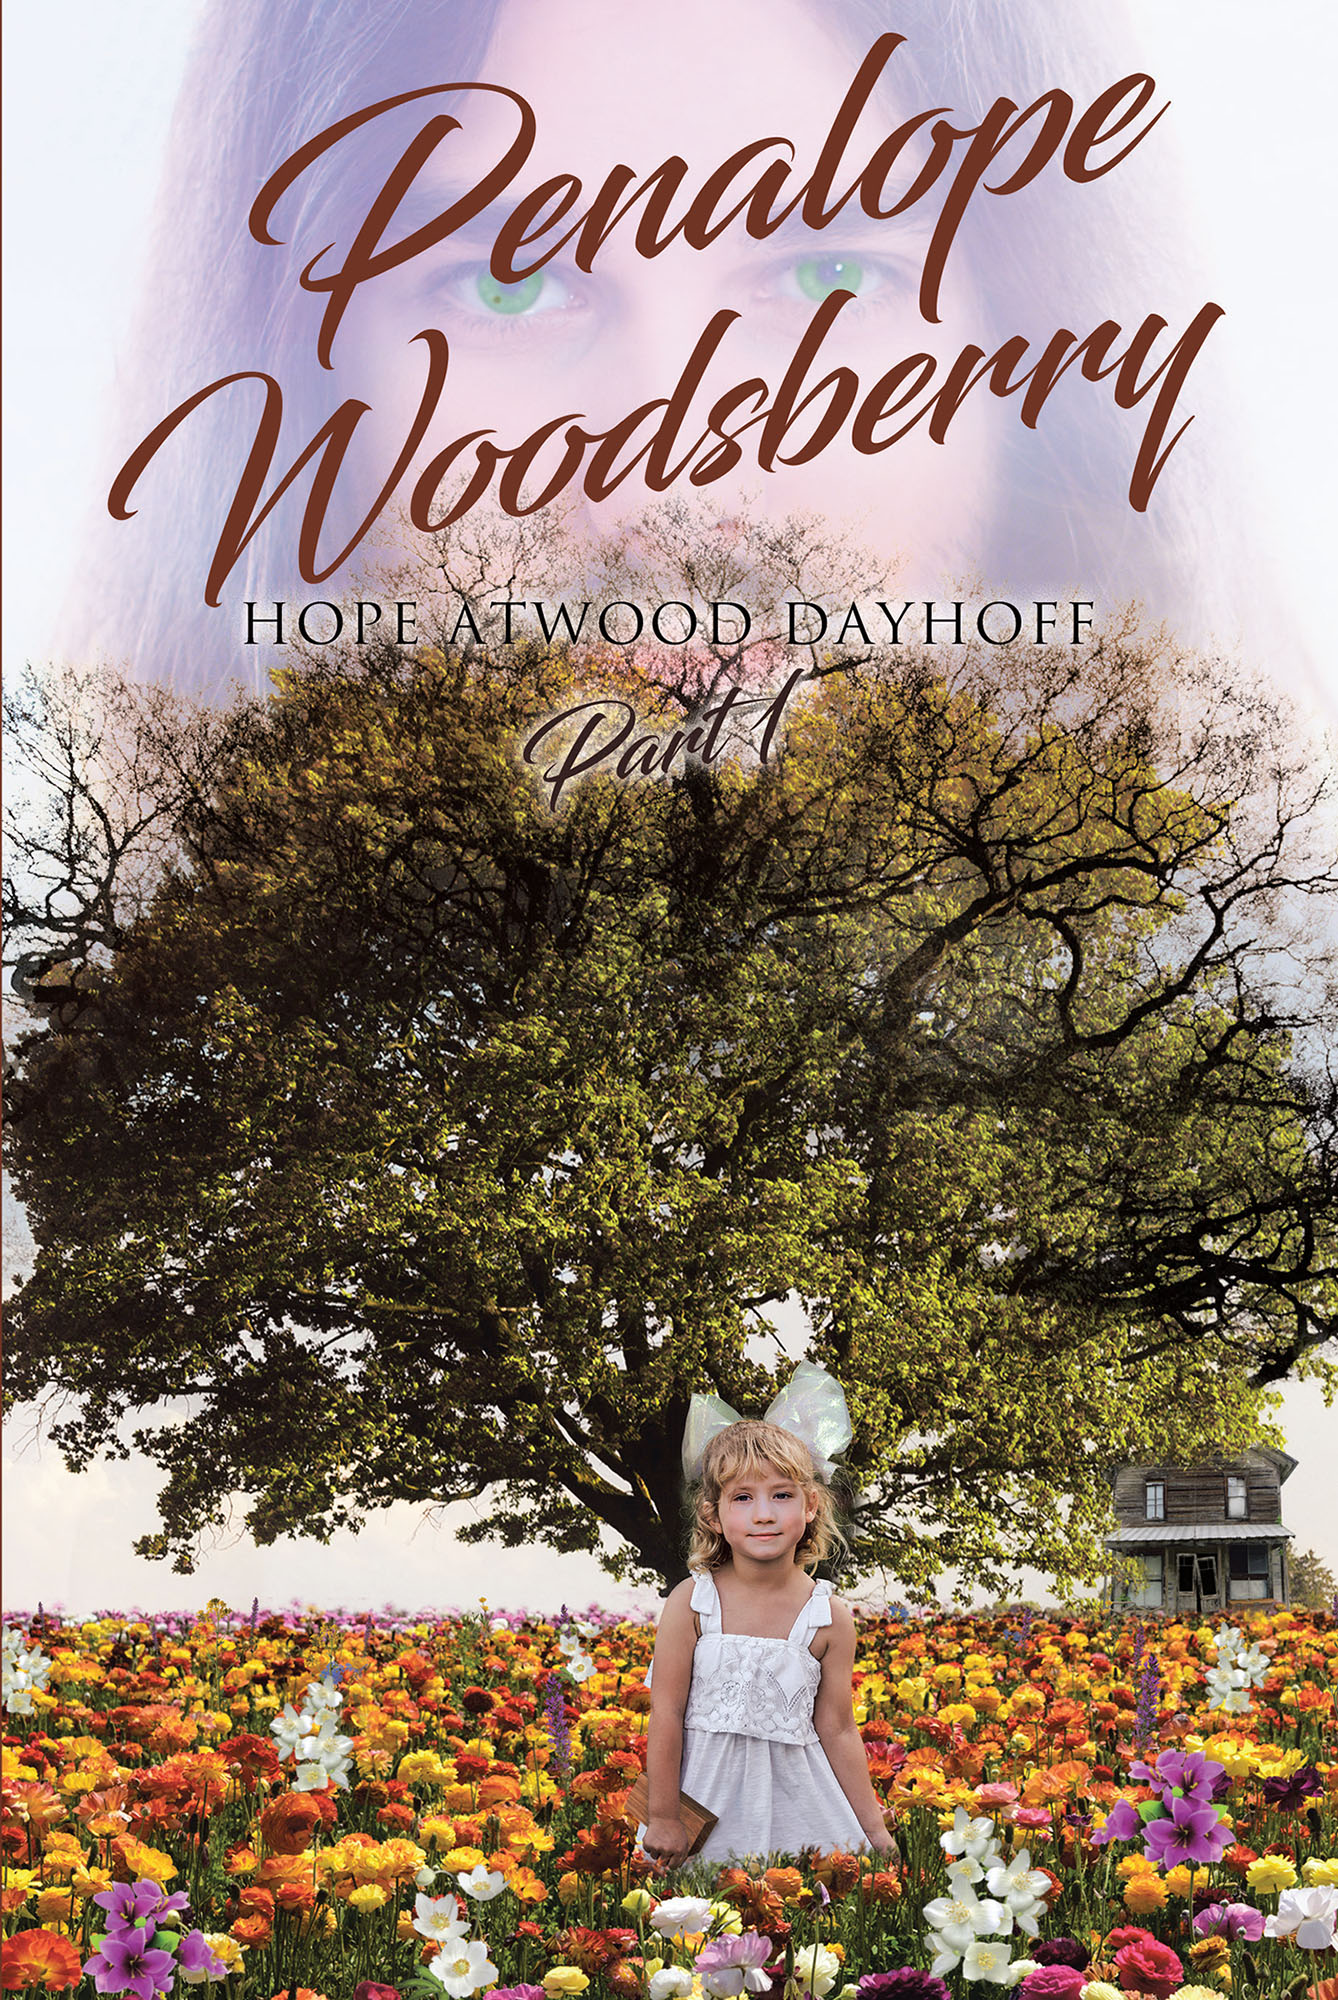 Penalope Woodsberry Cover Image